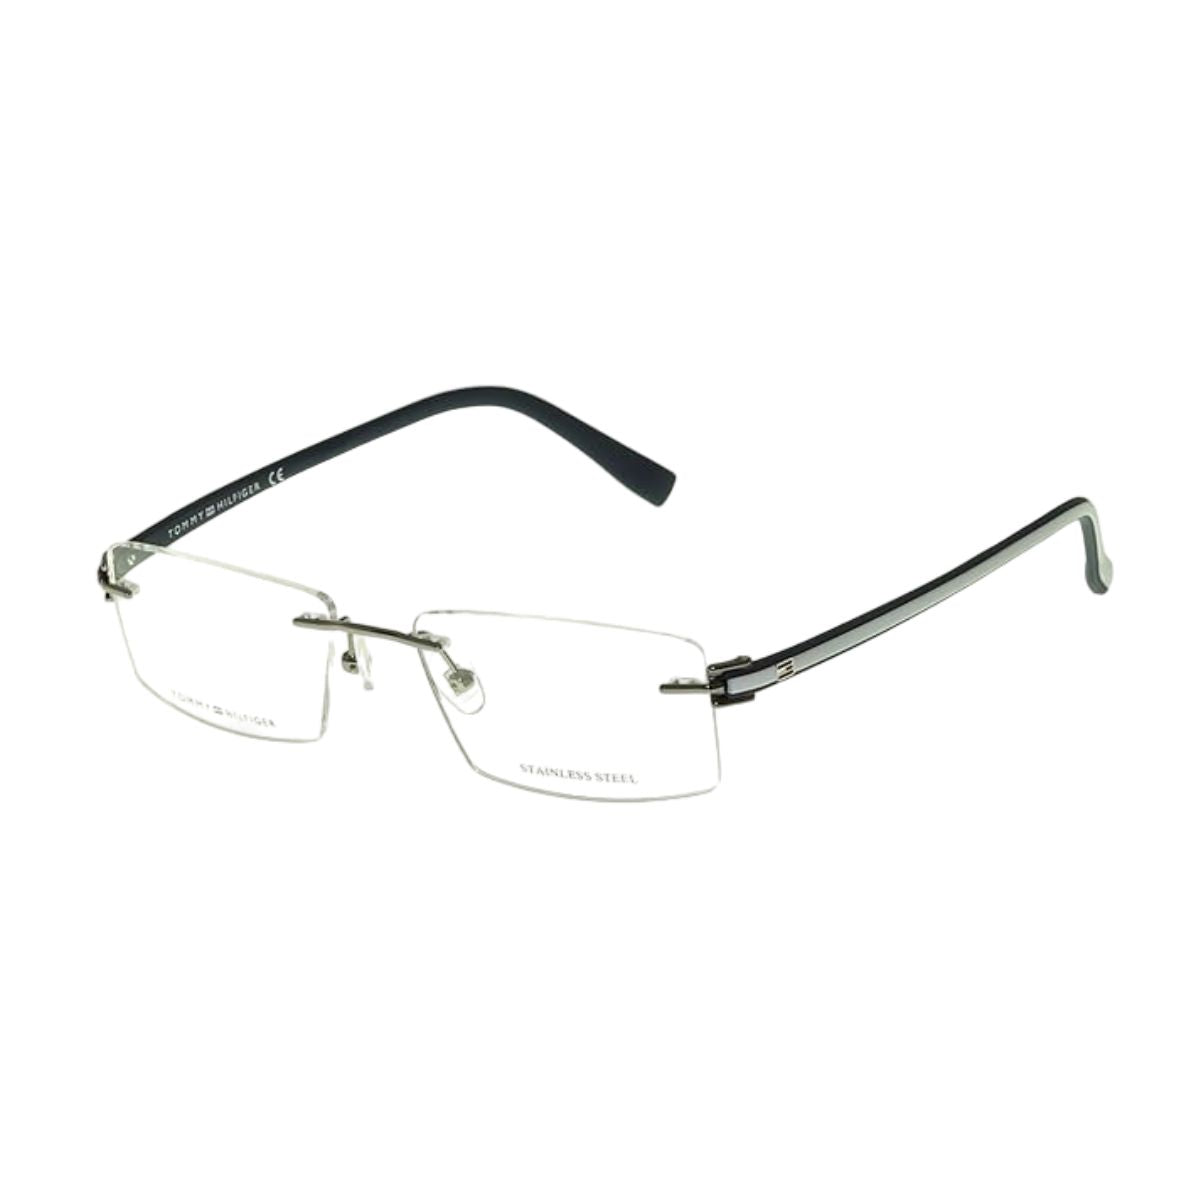 "Tommy Hilfiger 5733 C4 prescription glasses frame for men's and women's at optorium"